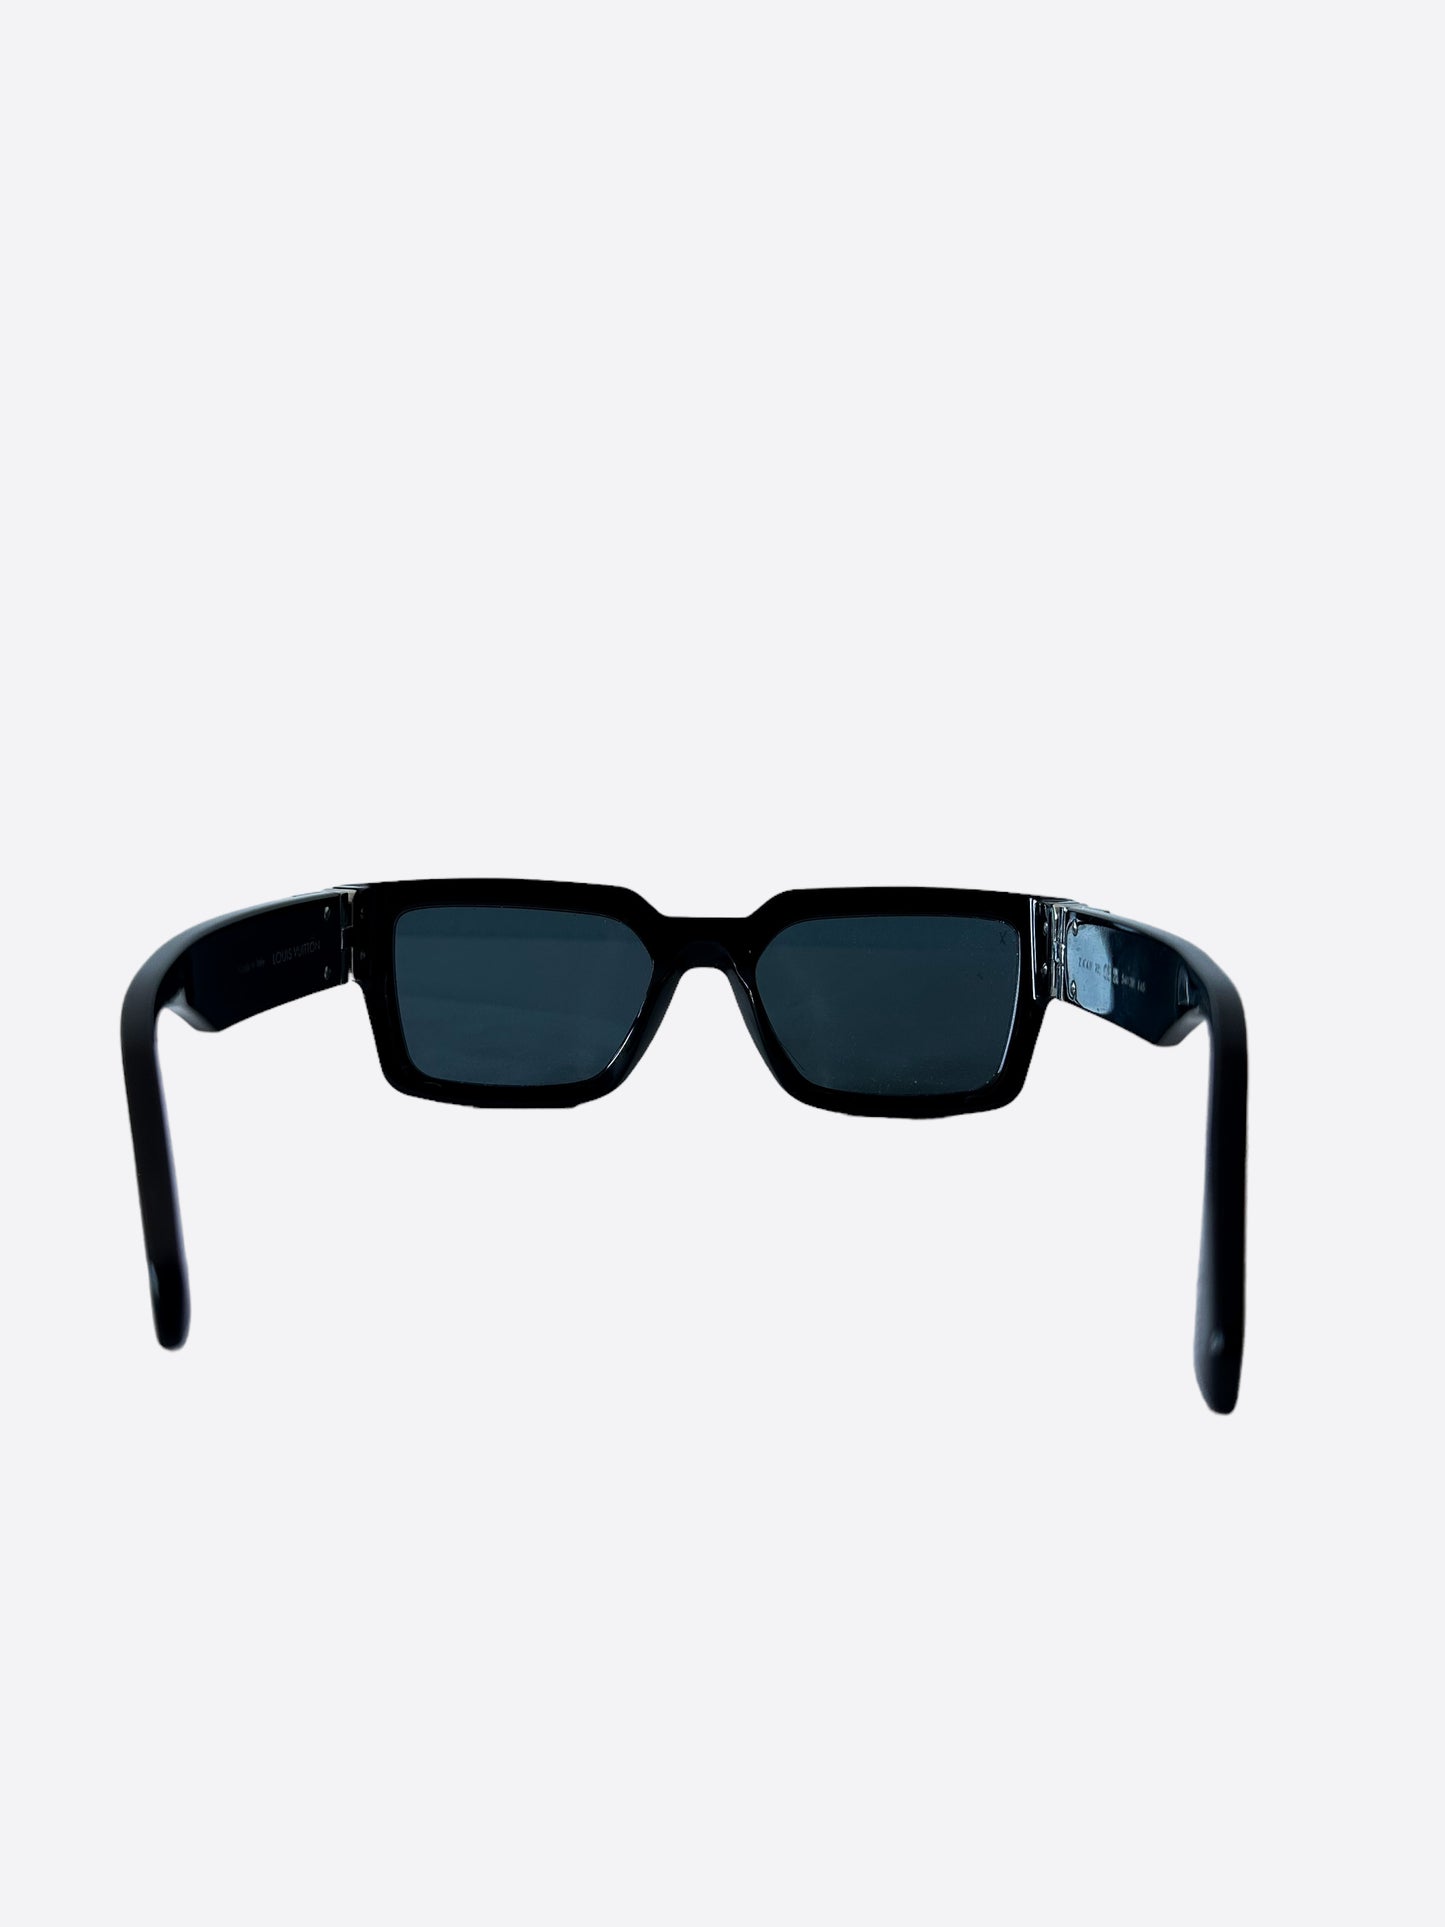 vuitton sunglasses black